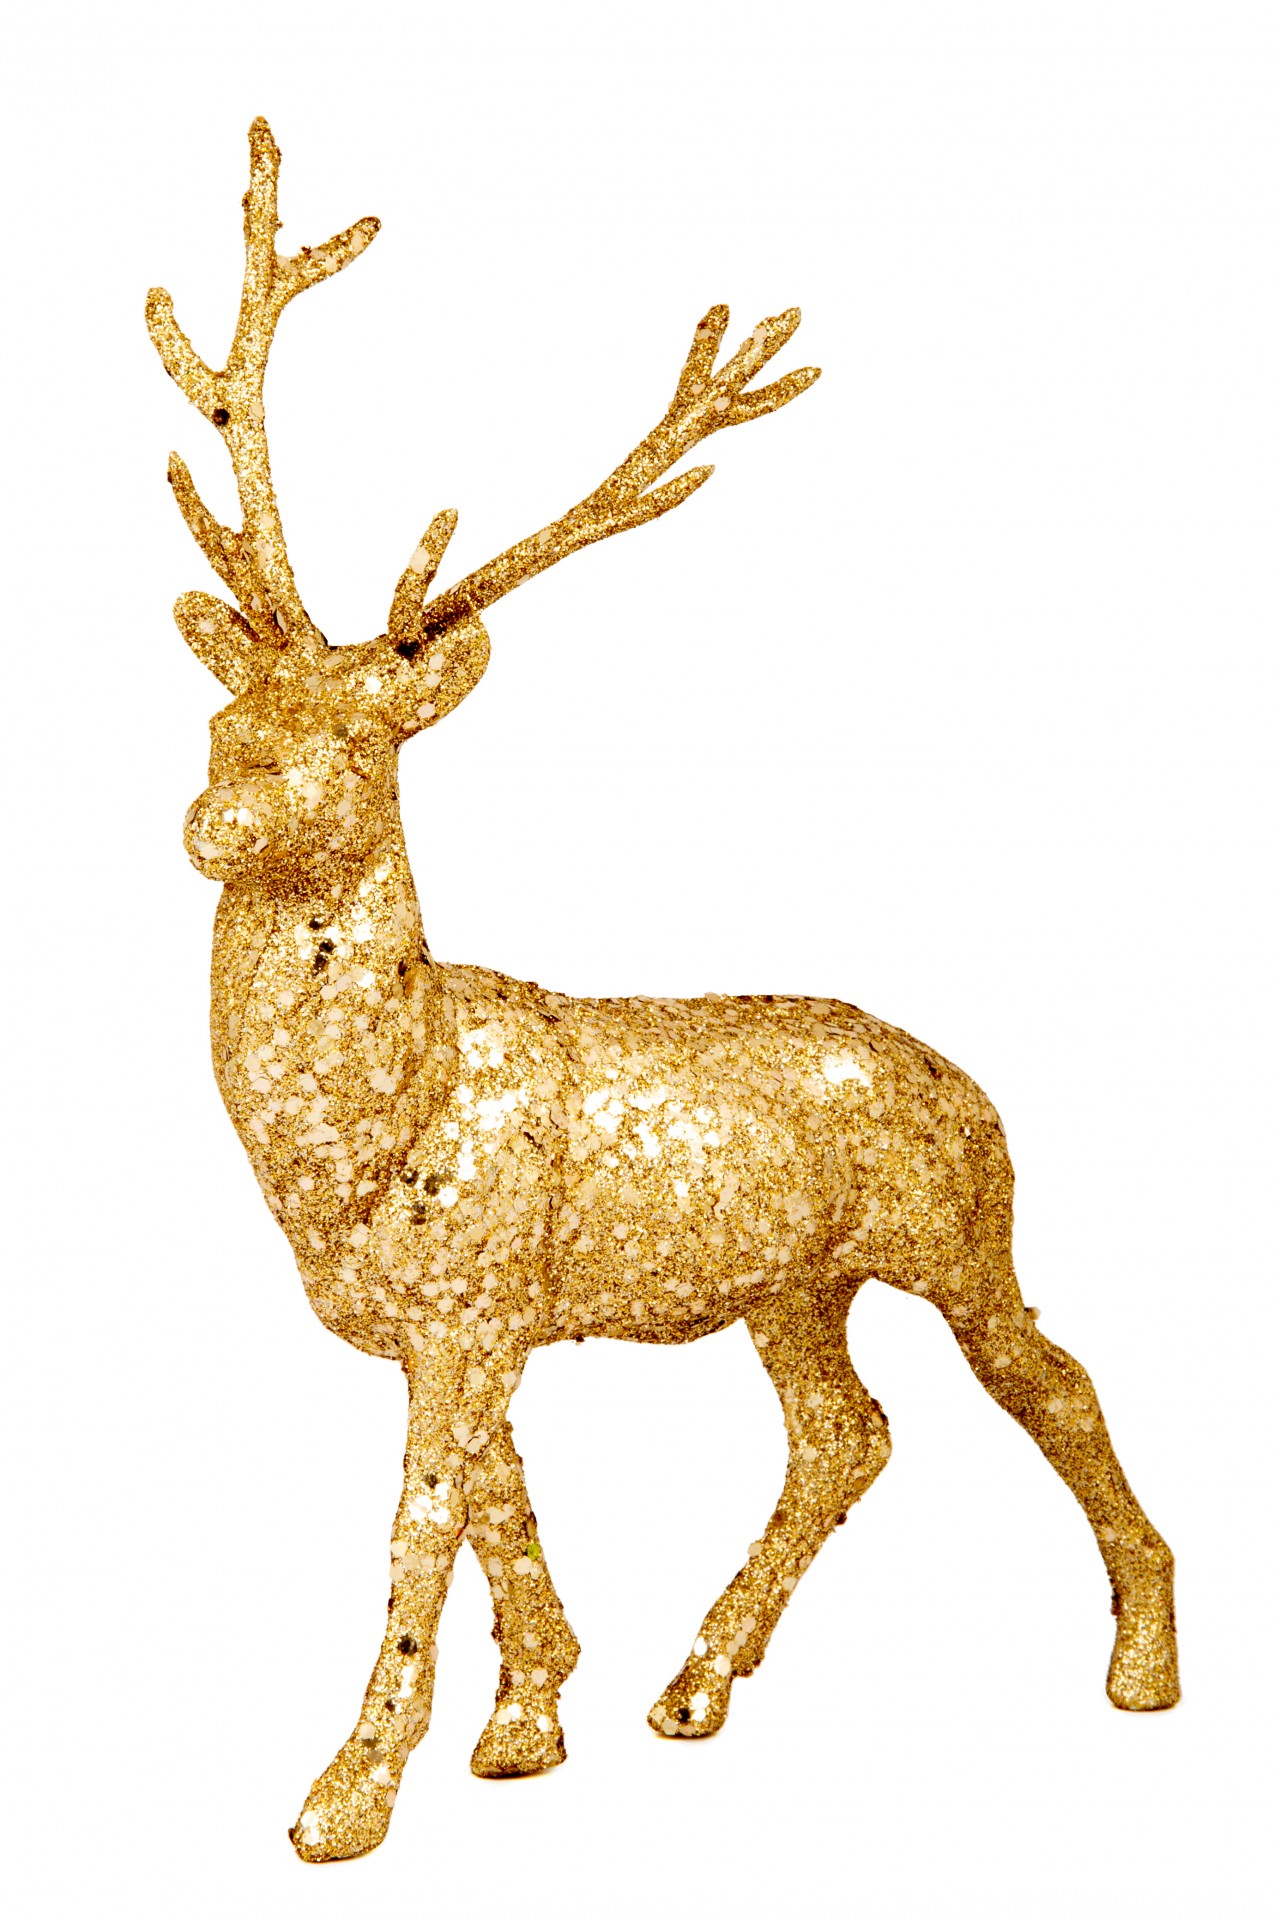 golden-reindeer-free-stock-photo-public-domain-pictures